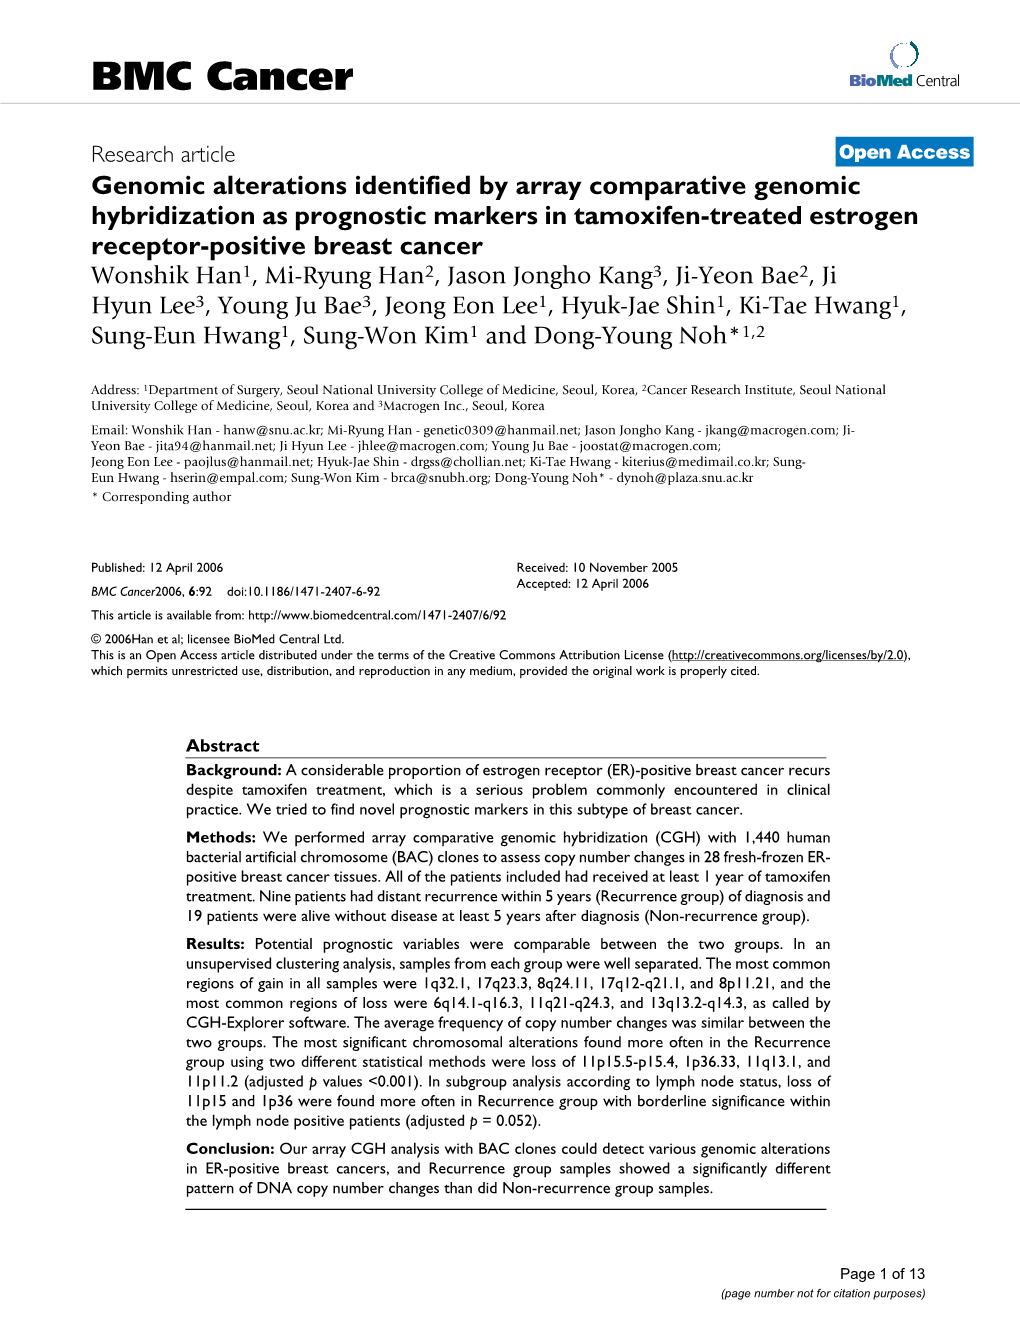 Genomic Alterations Identified by Array Comparative Genomic Hybridization